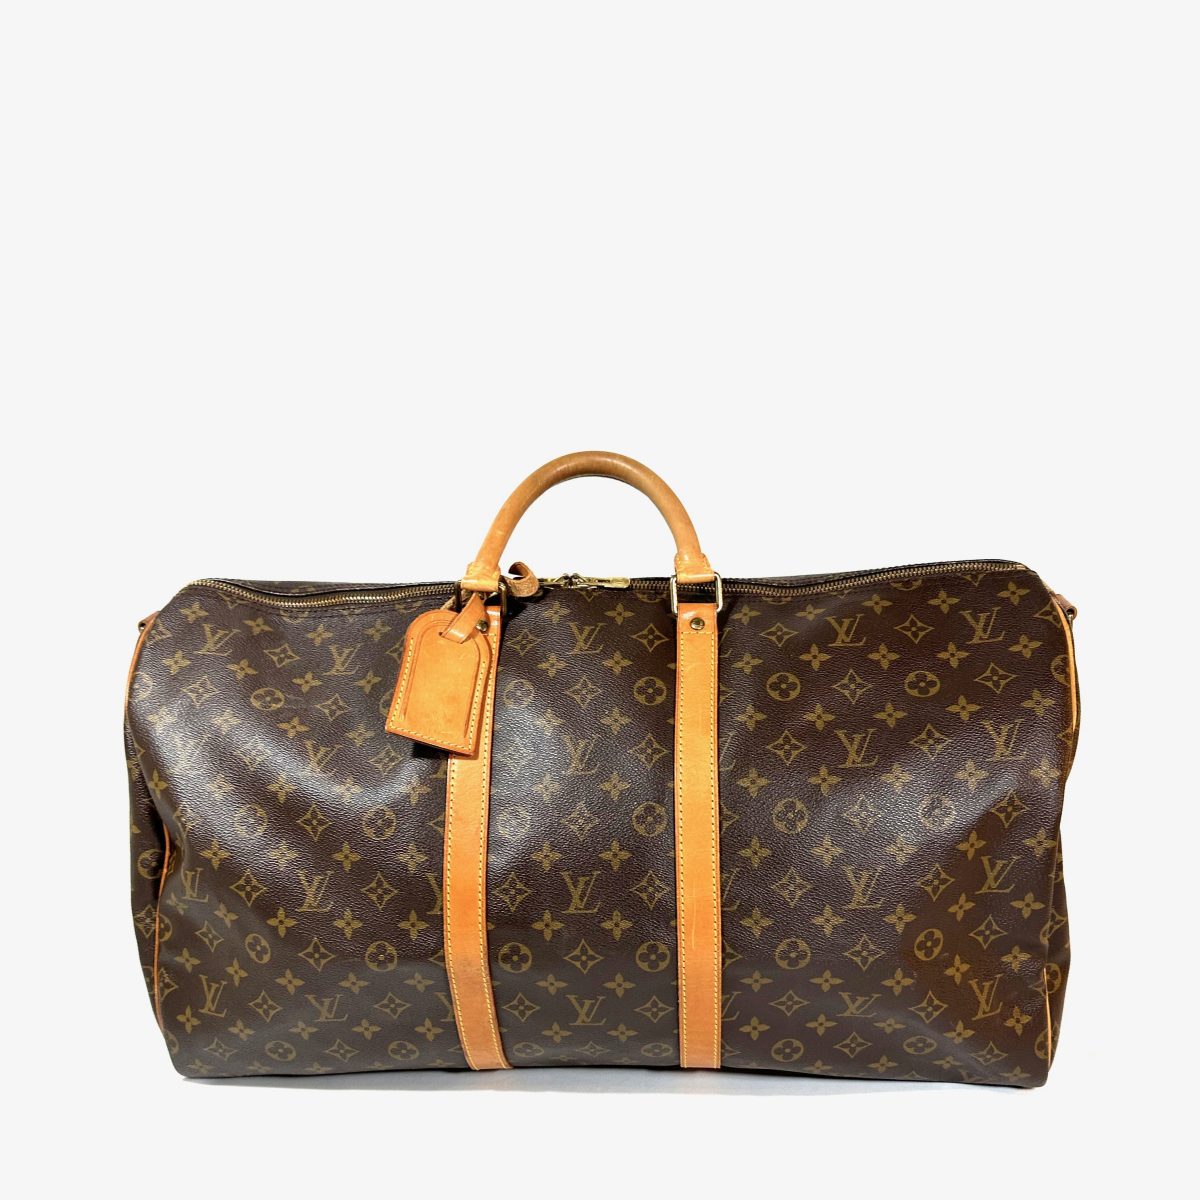 Louis Vuitton preloved bags